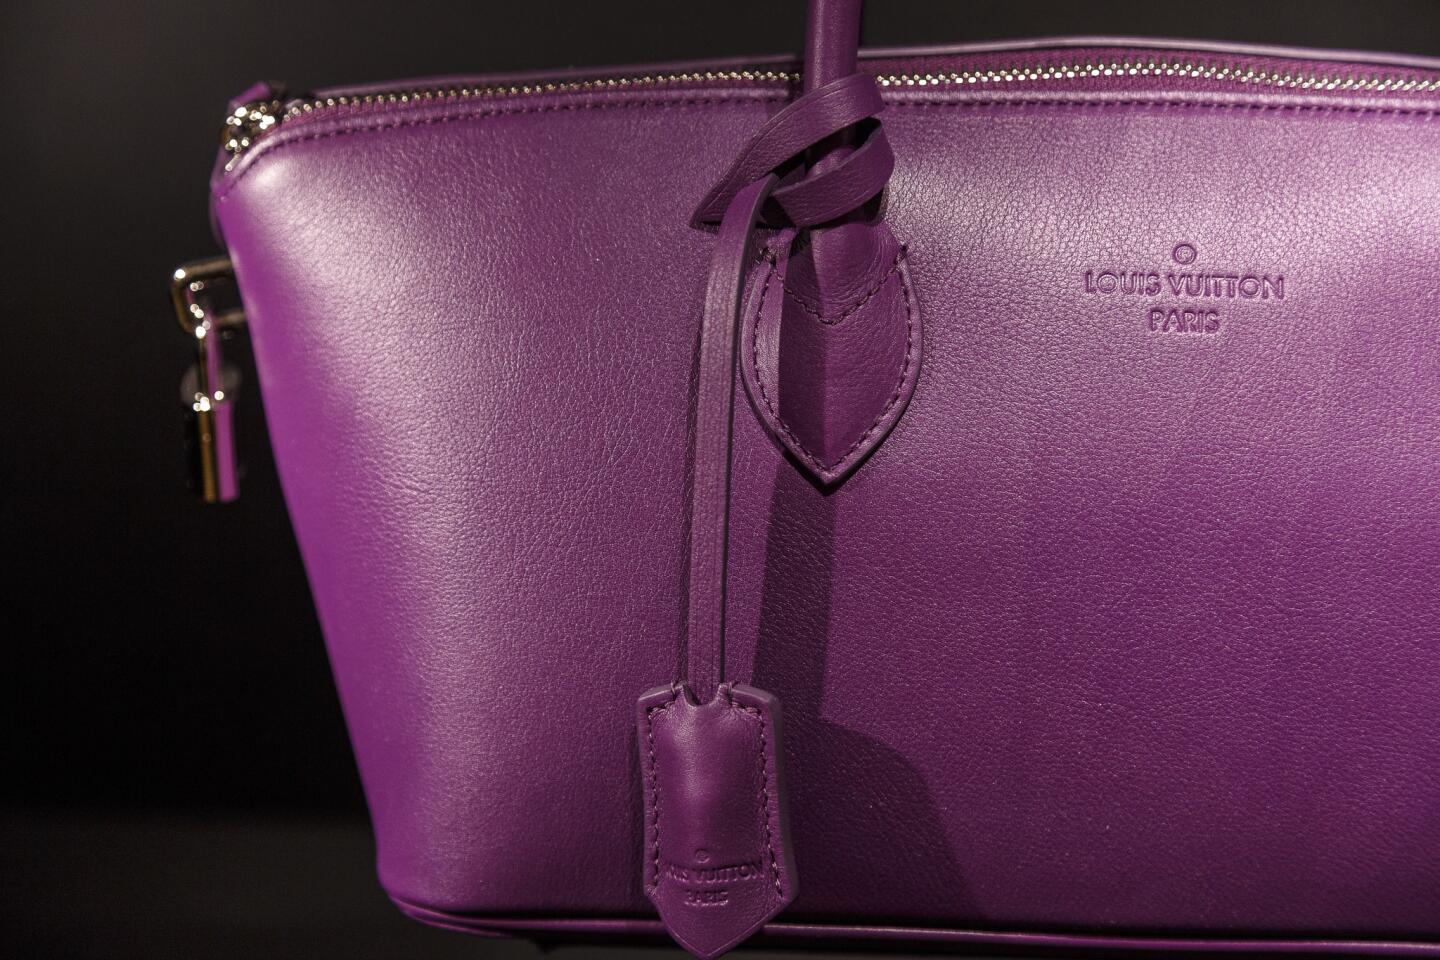 Louis Vuitton Handbags for sale in Hoisington, Kansas, Facebook  Marketplace